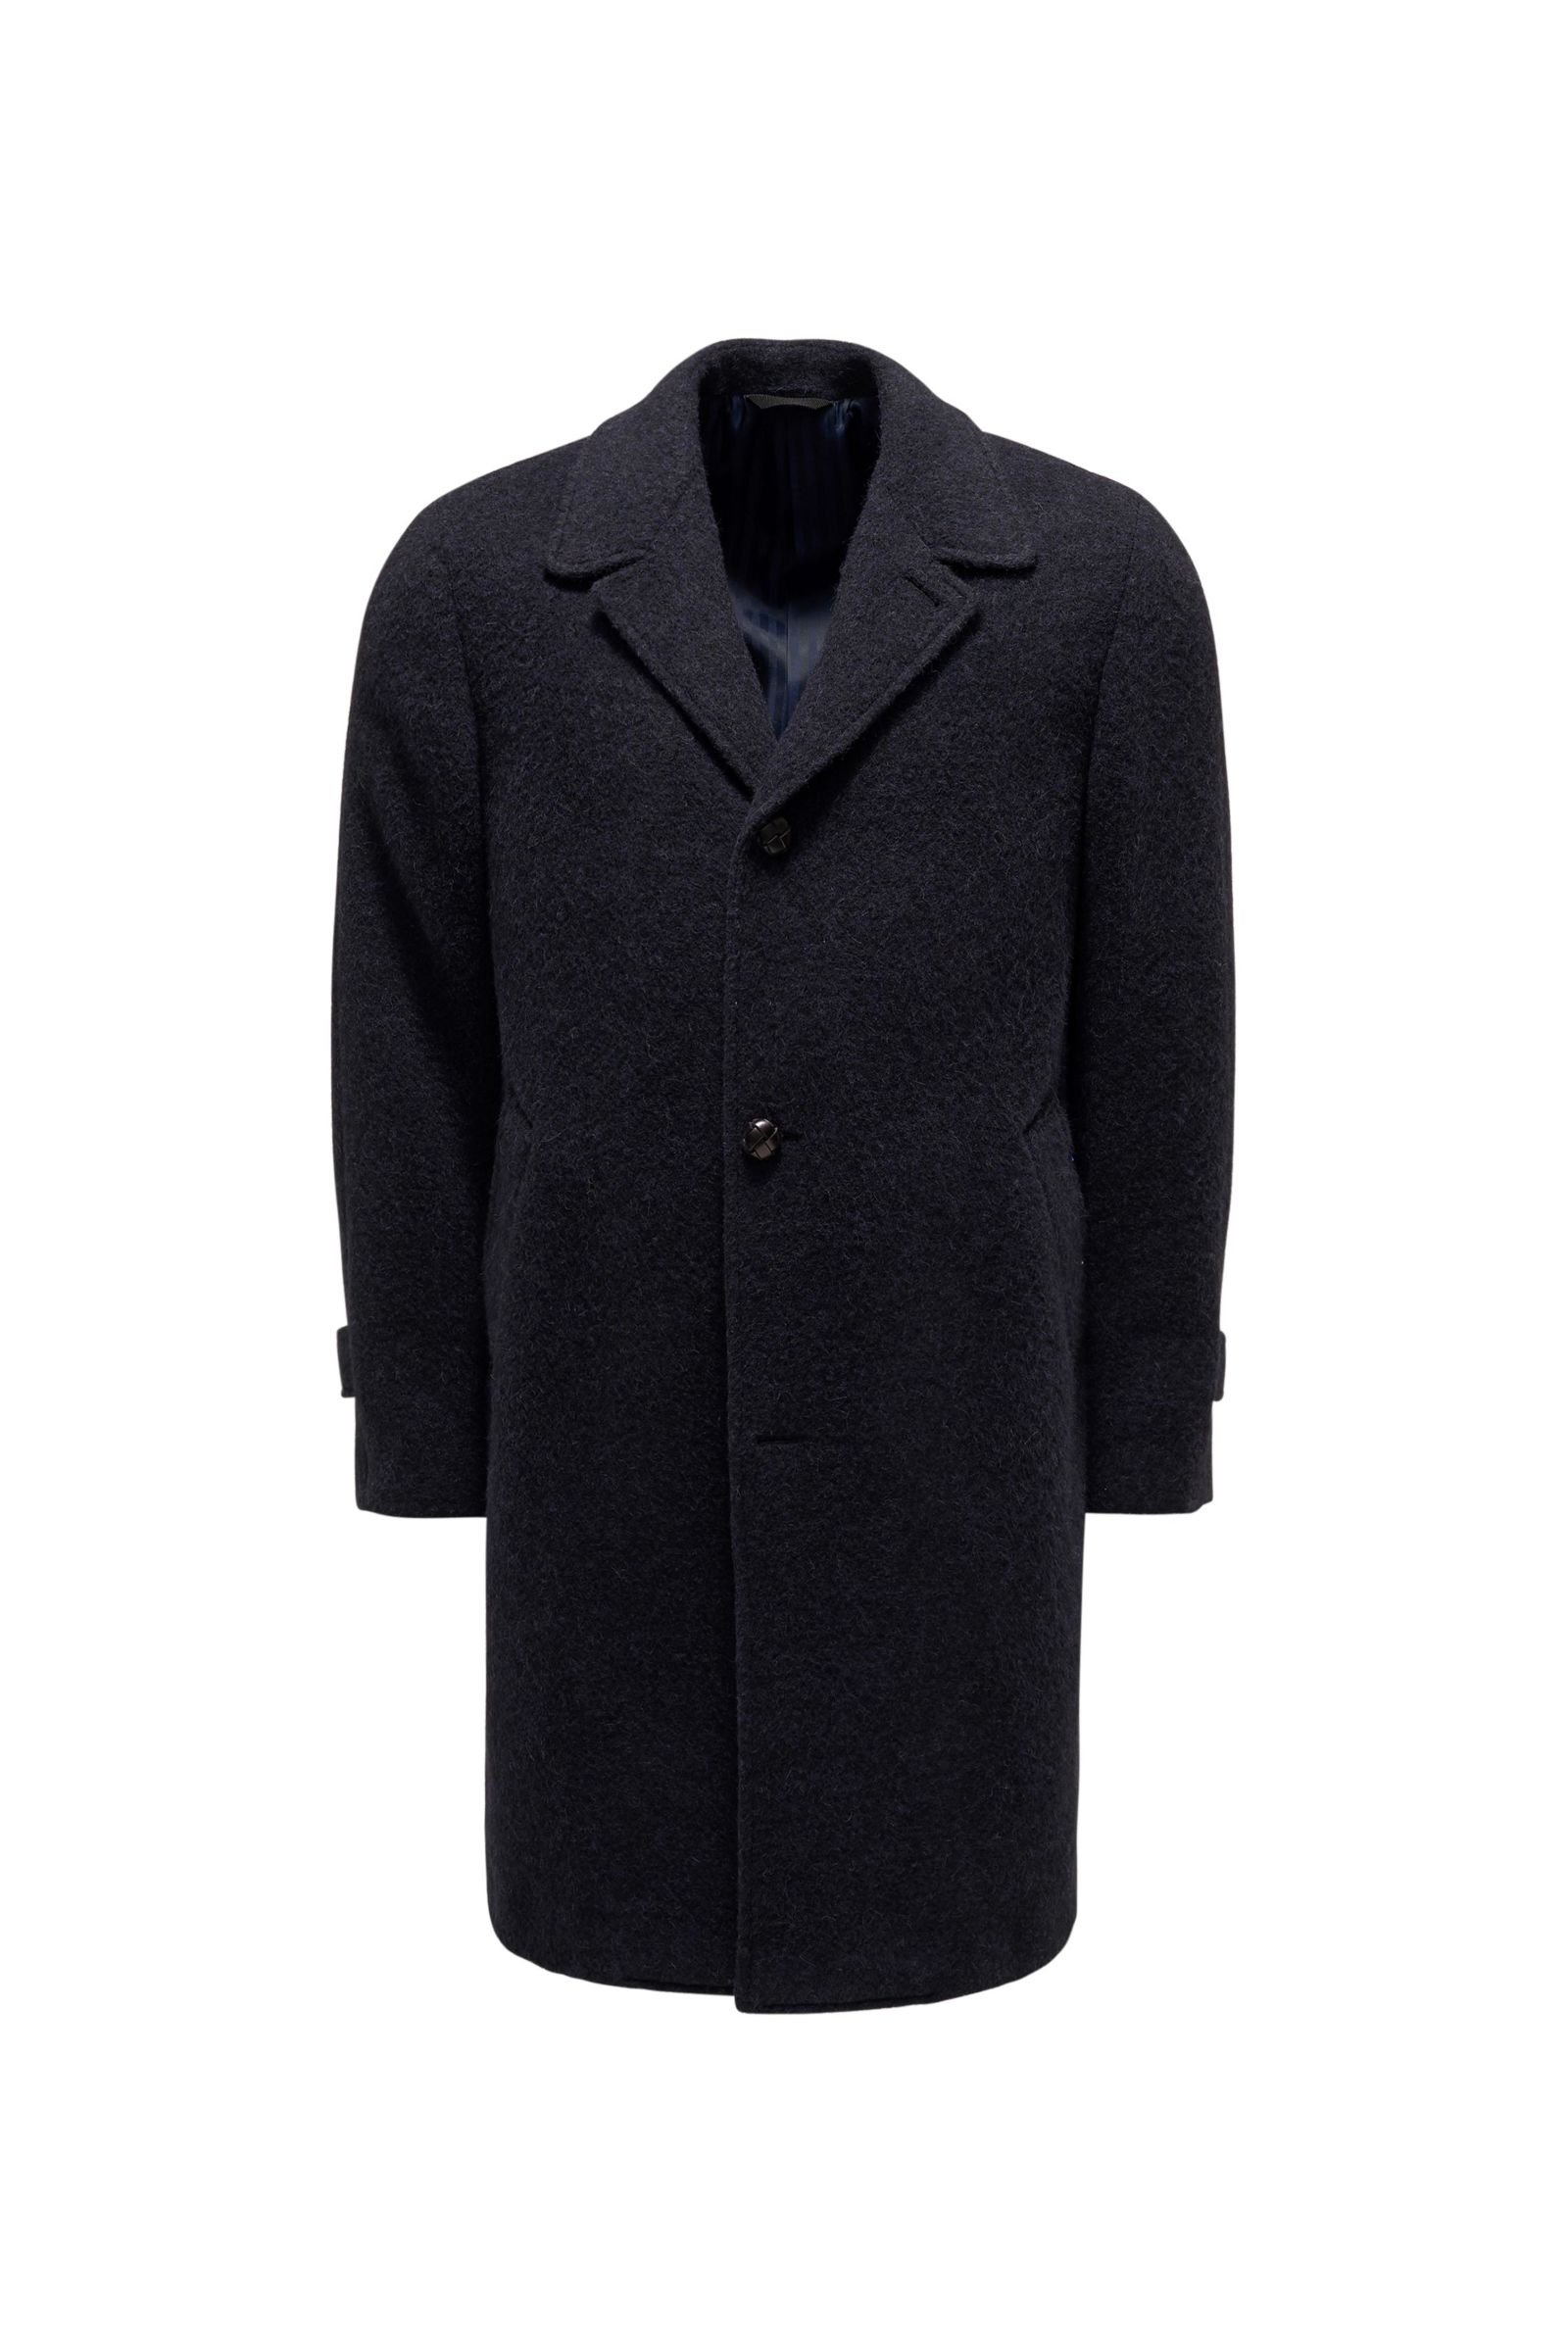 MASSIMO PIOMBO coat 'Douglas', dark navy | BRAUN Hamburg